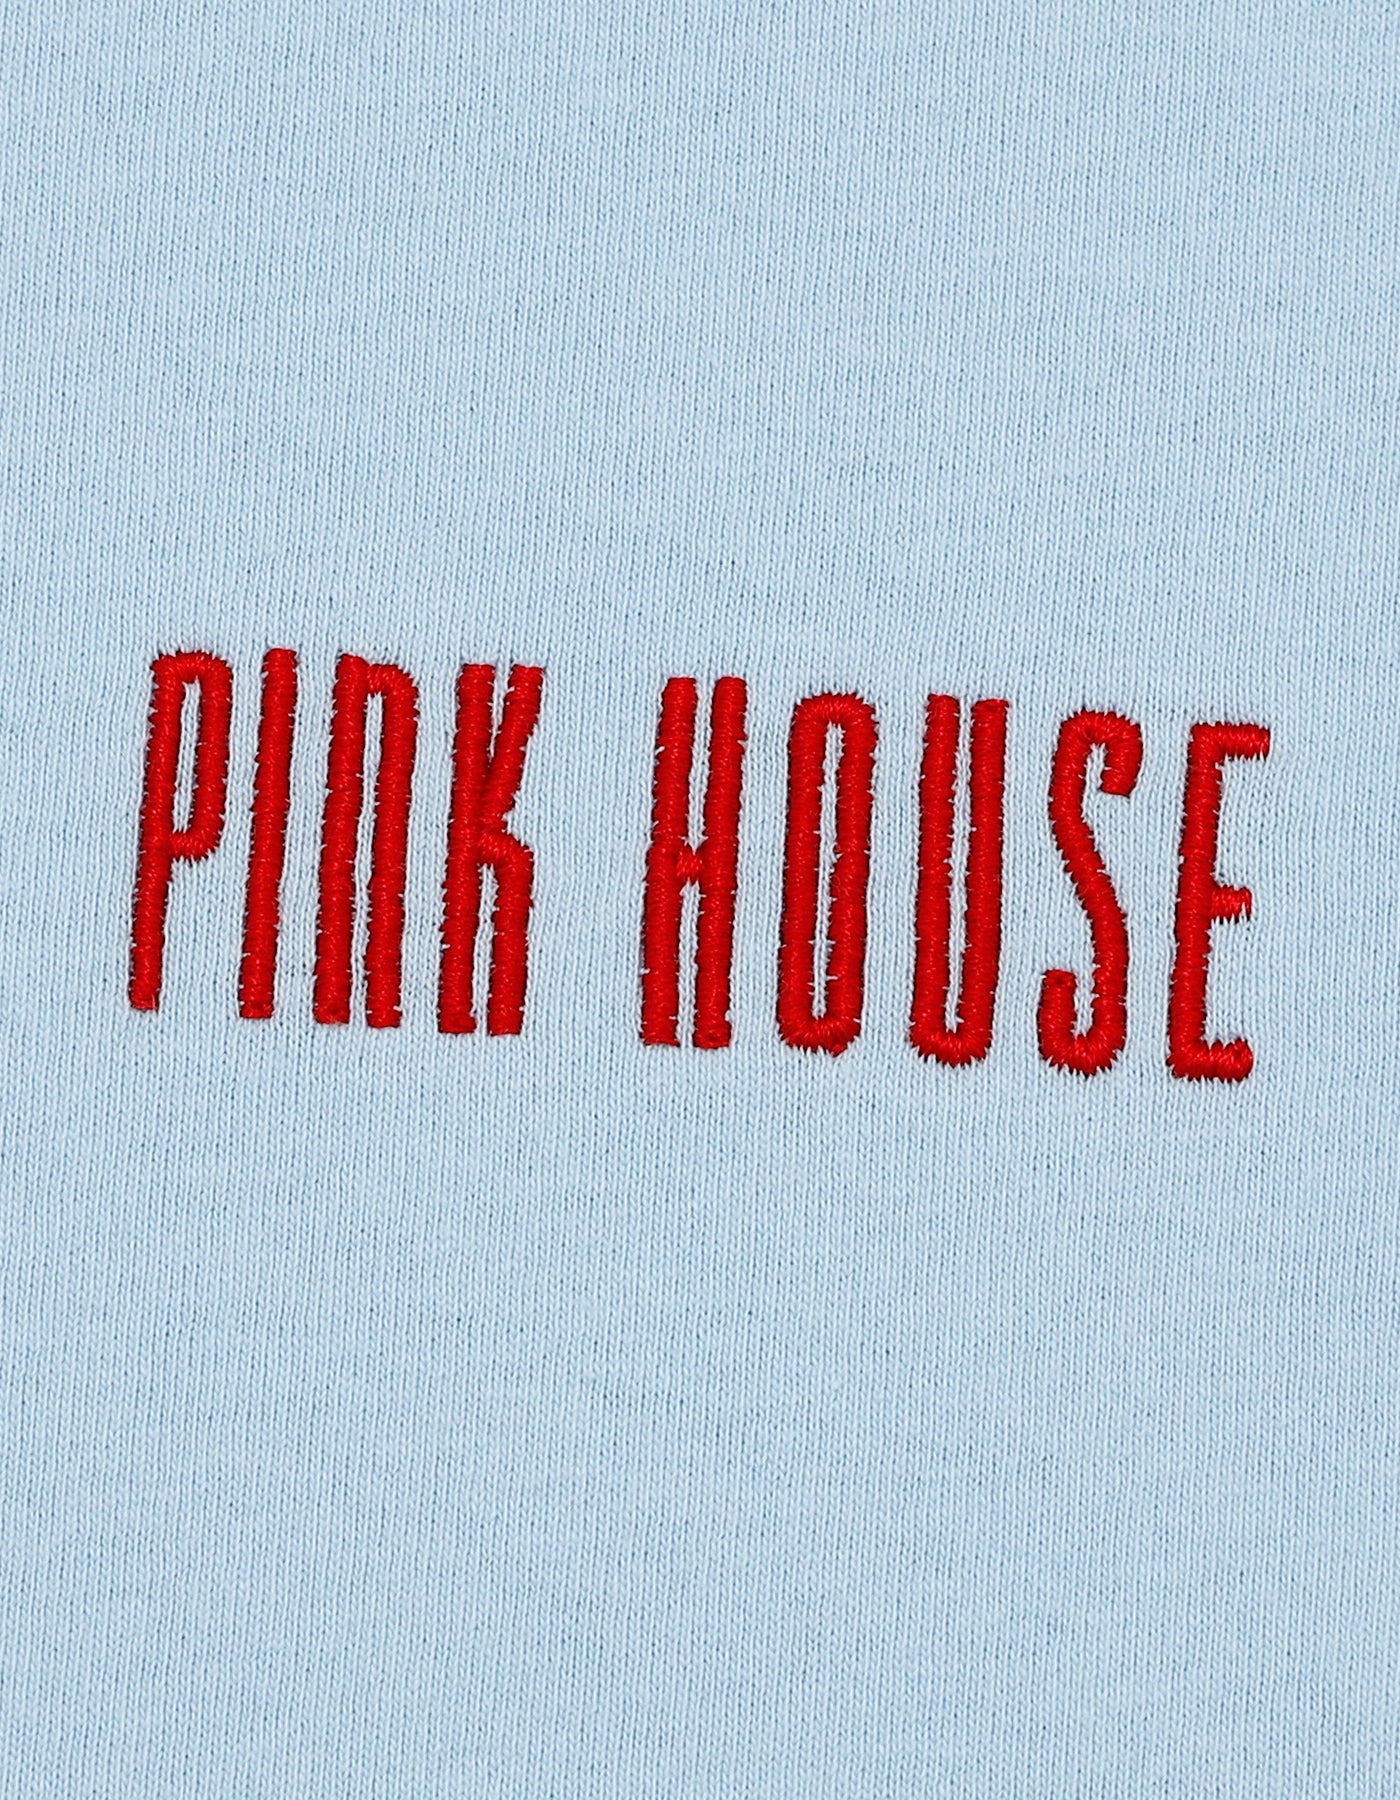 little sunny bite と pink house frill collar long tee / SAX